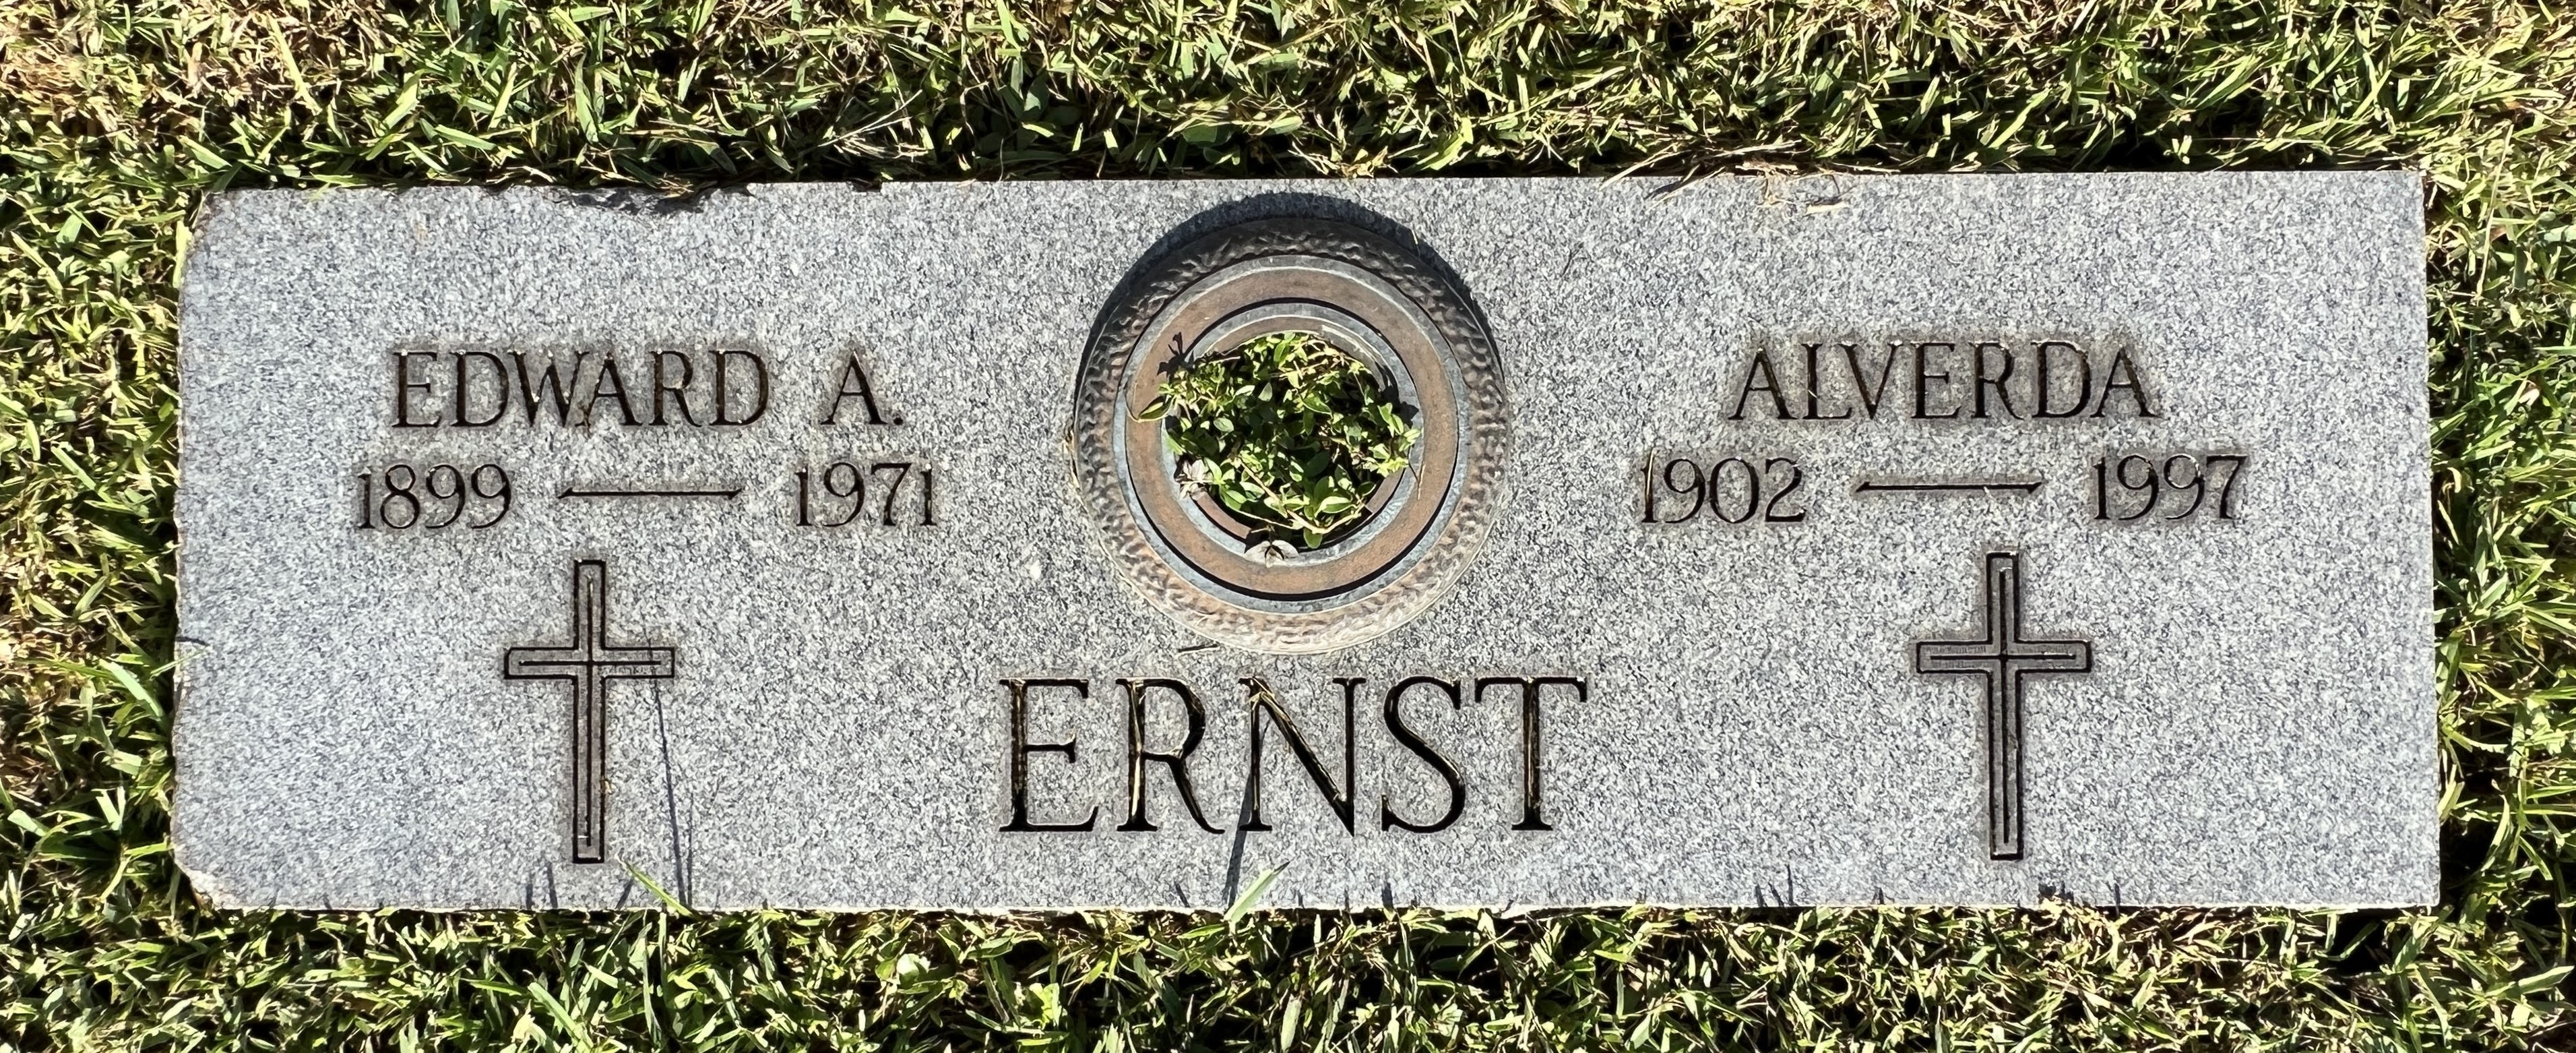 Edward A Ernst